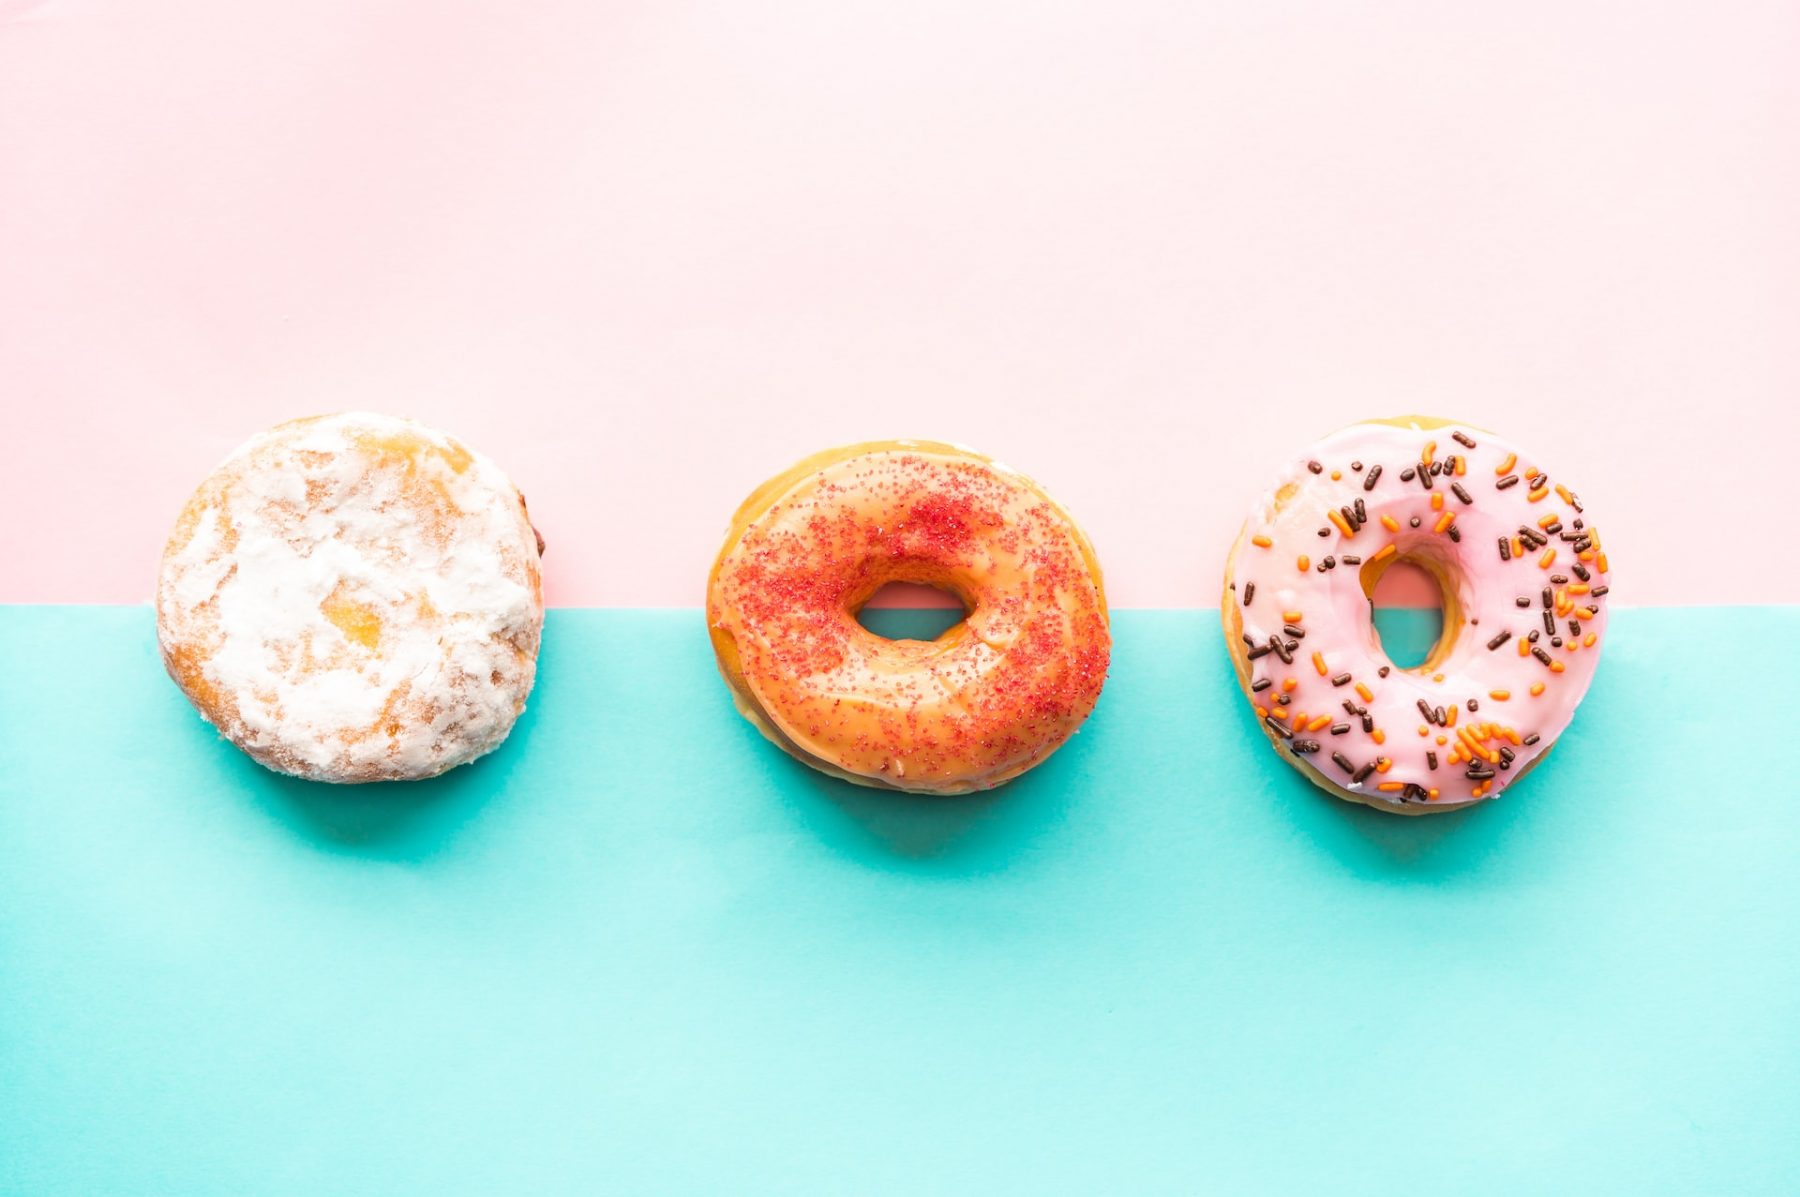 Donut time: Πώς να φτιάξετε σπιτικά donuts με γλάσο